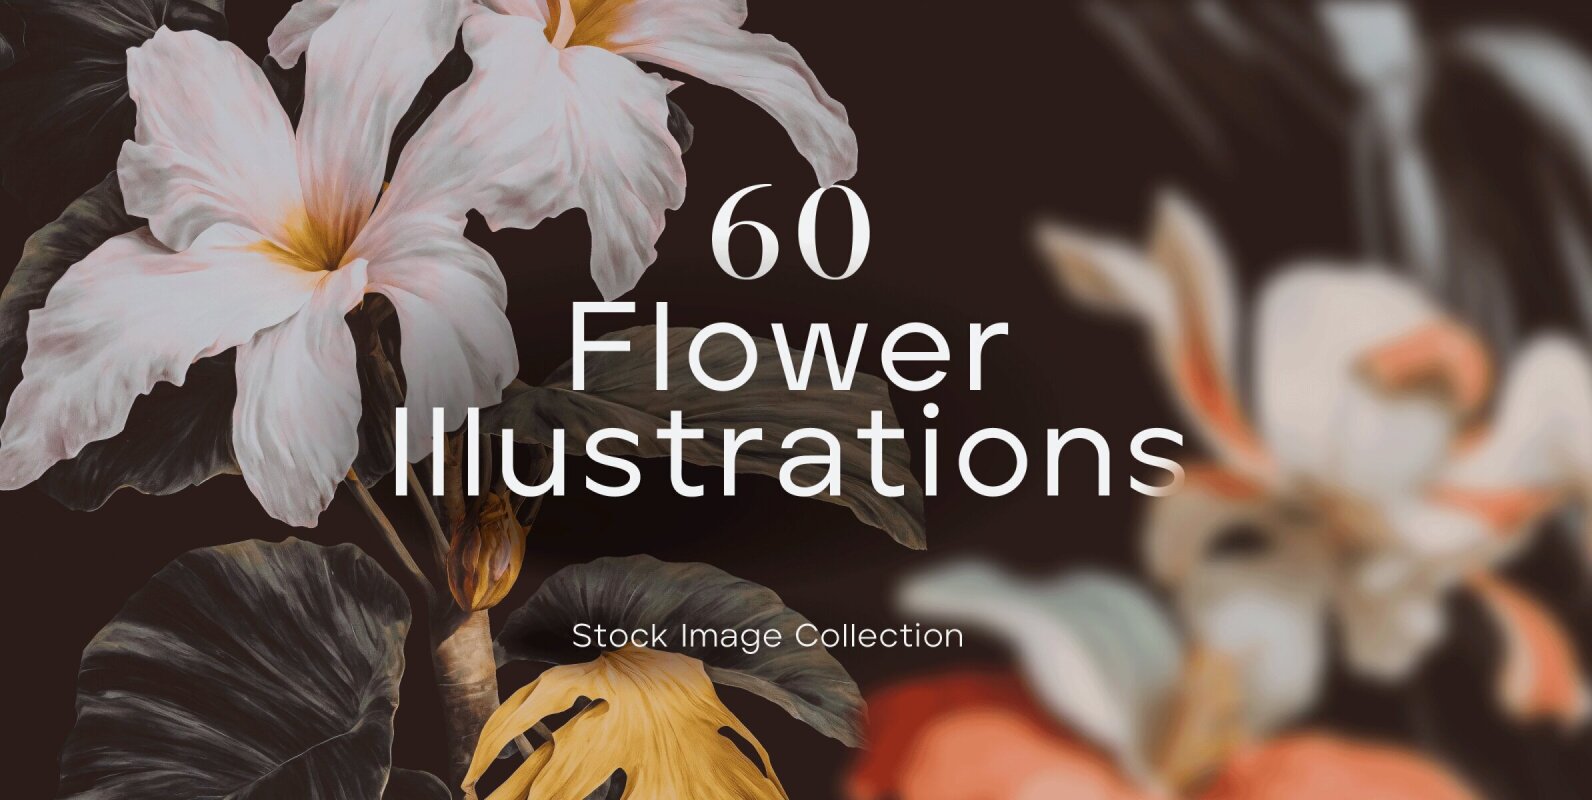 60 Flower Illustrations